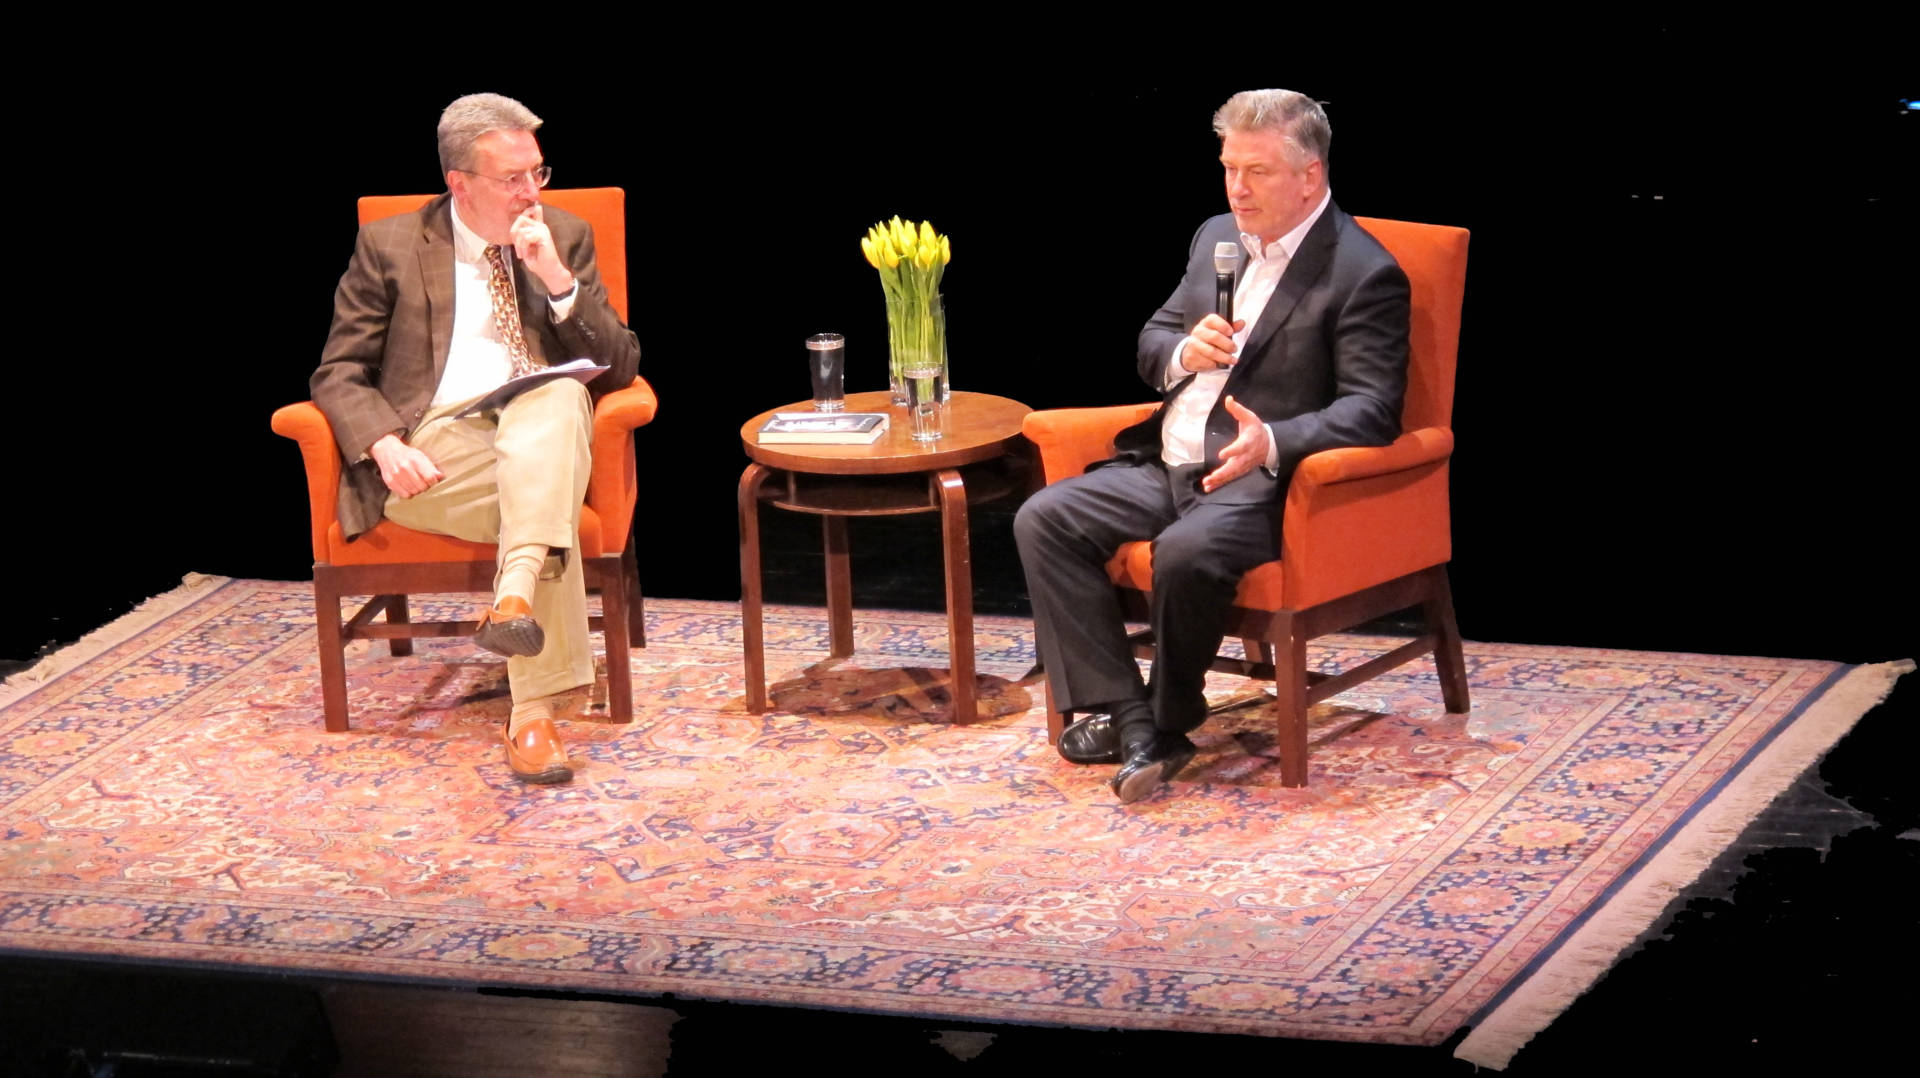 Alec Baldwin in conversation with Steven Winn at San Francisco's Nourse Theater on April 13, 2017.